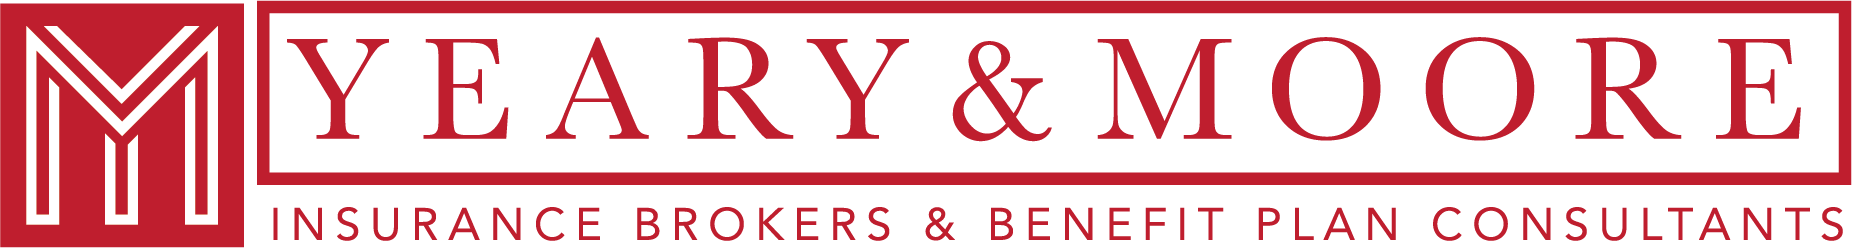 Yeary And Moore LLC - Matthew Morri - Birmingham, AL